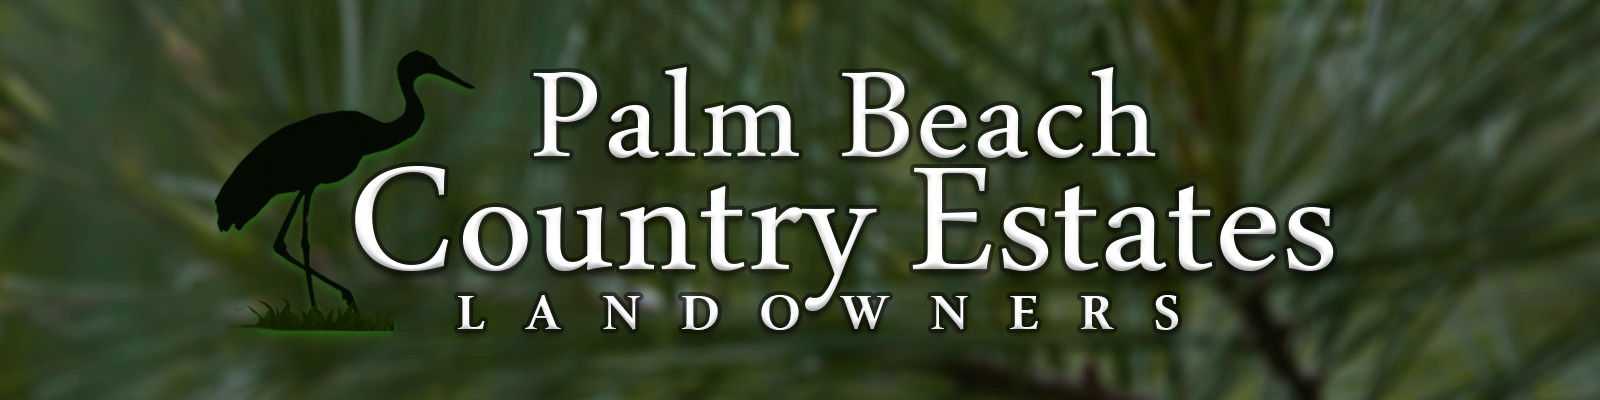 Palm Beach Country Estates Landowners